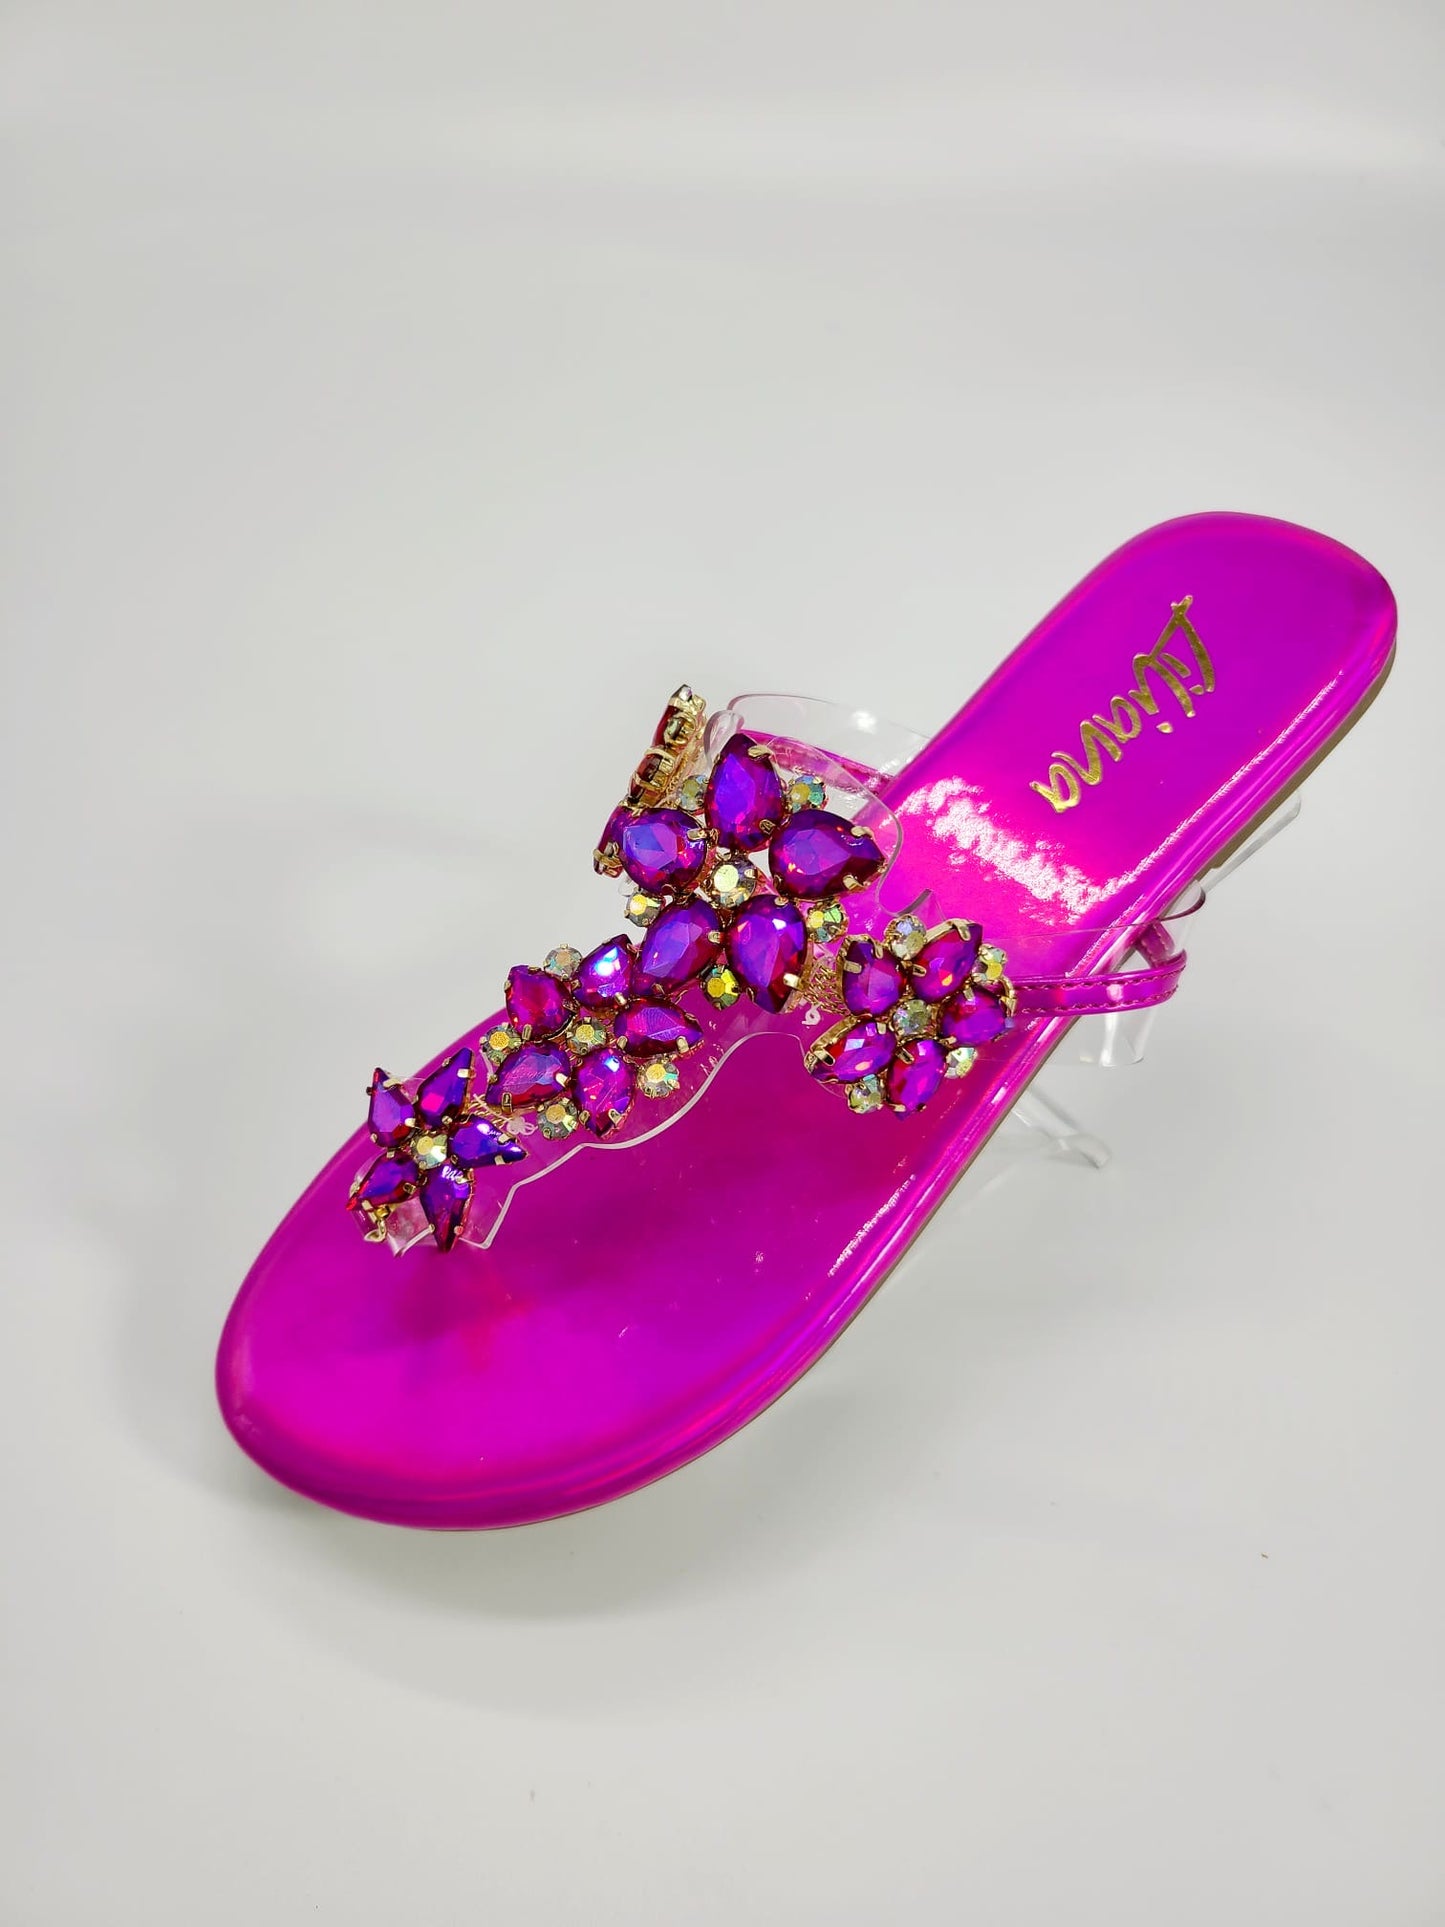 Moly Rhinestone Faux Jeweled Thong Flat Sandals (Pink)